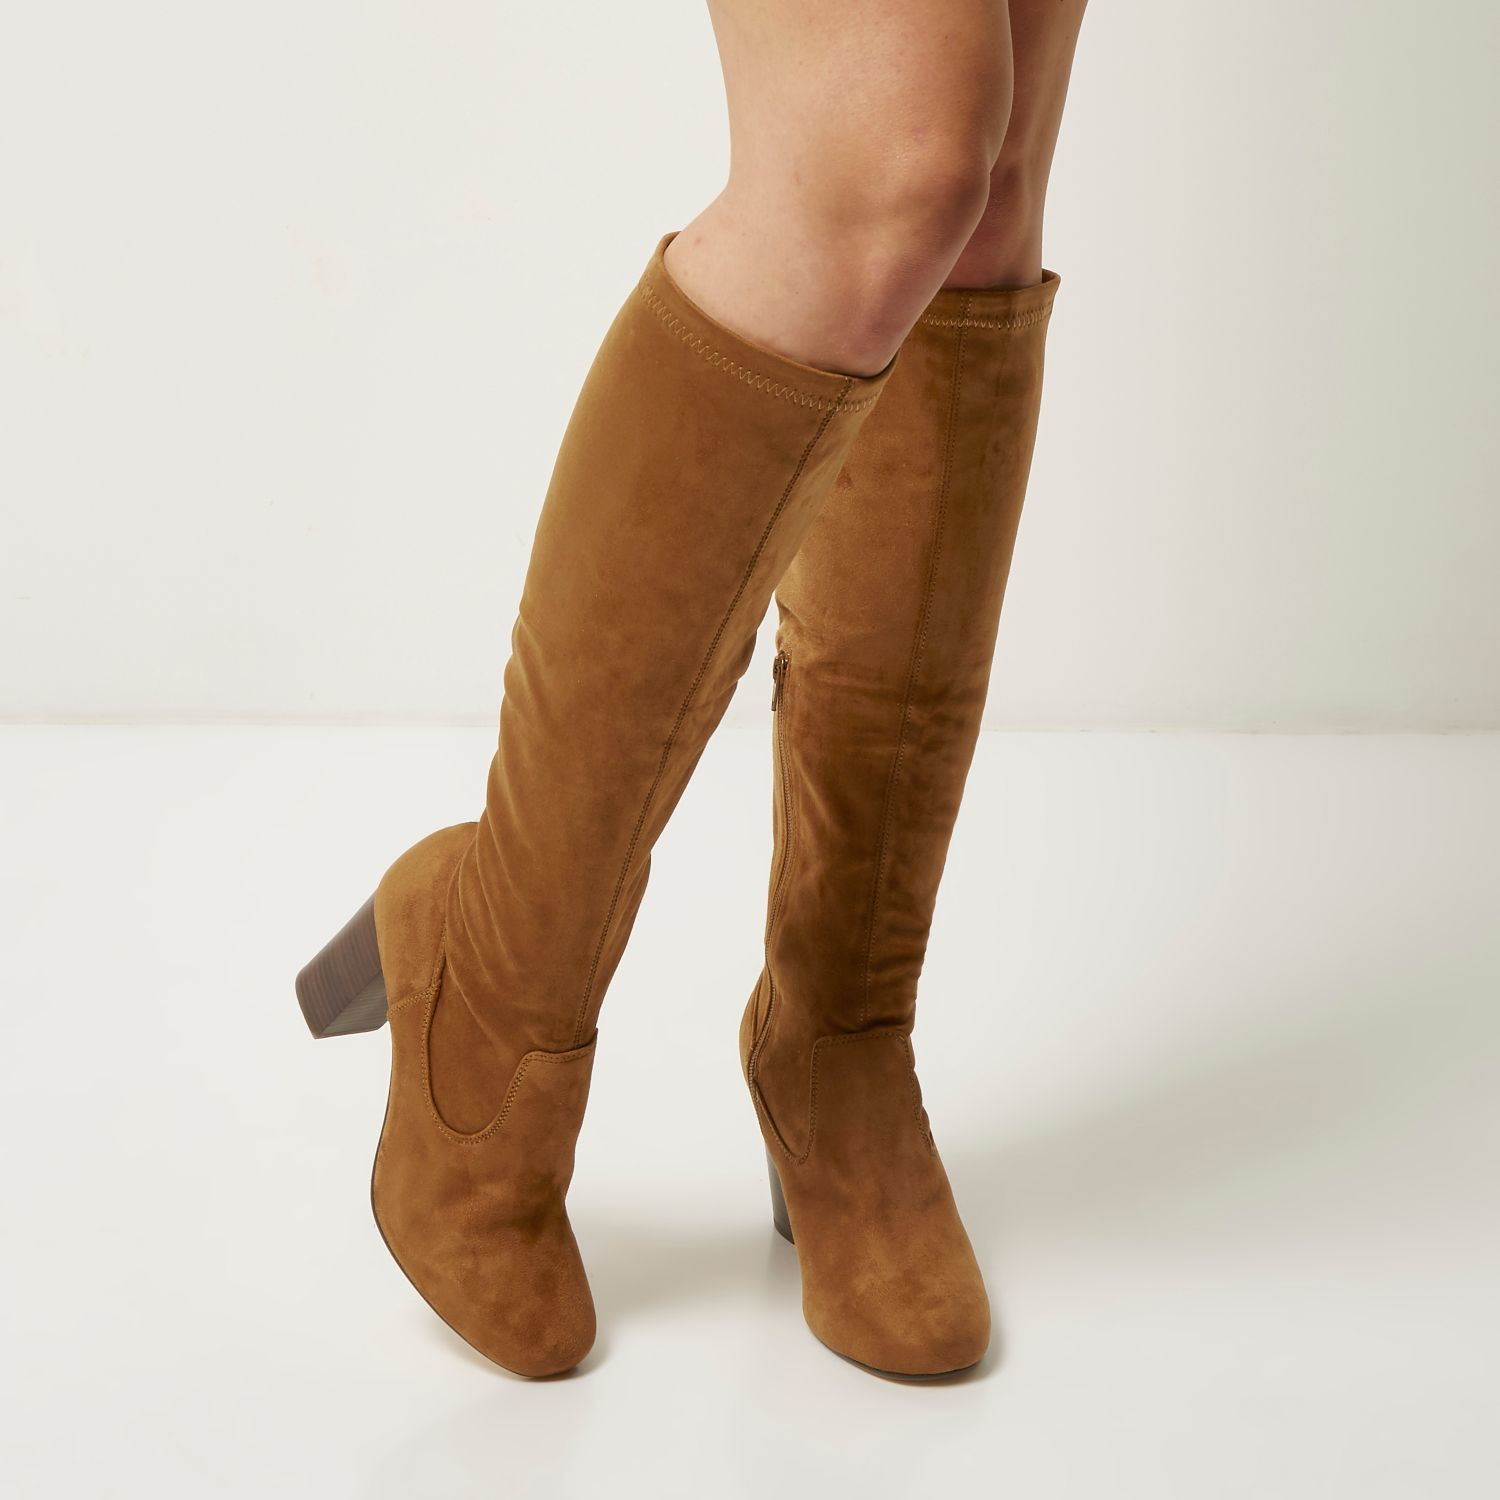 Buy > knee high boots suede brown > in stock